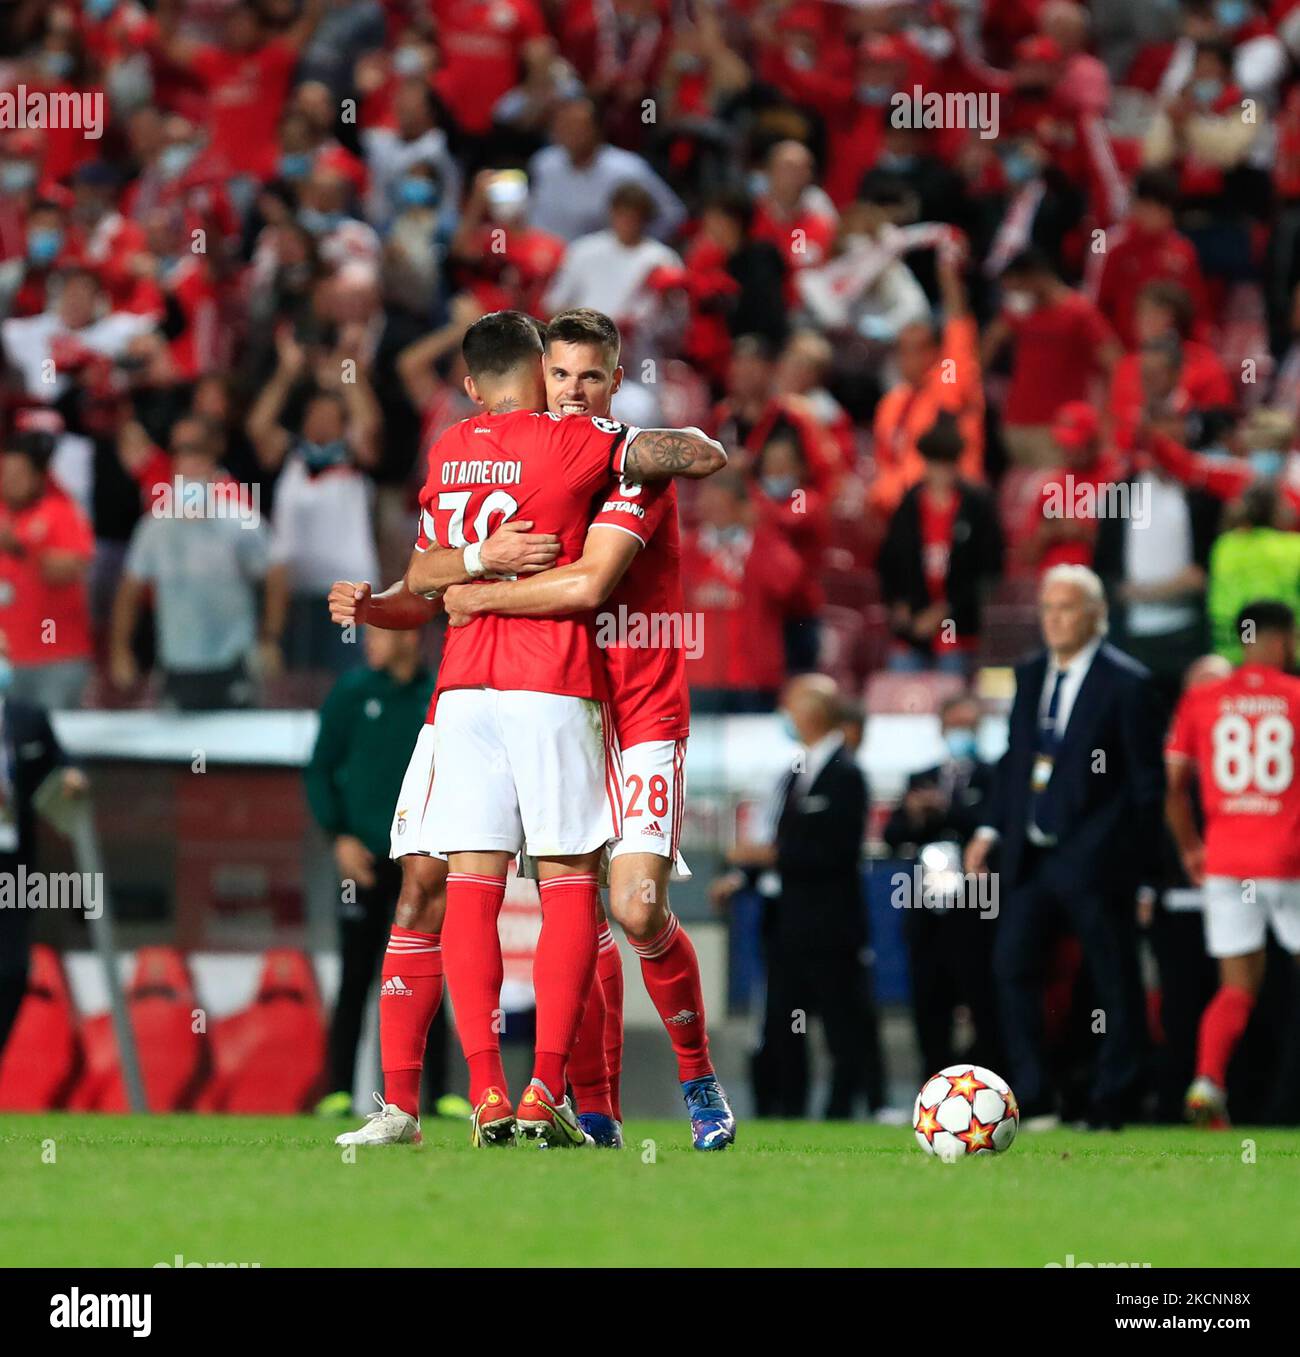 Champions: Benfica-Barcelona, 3-0 (resultado final) - CNN Portugal